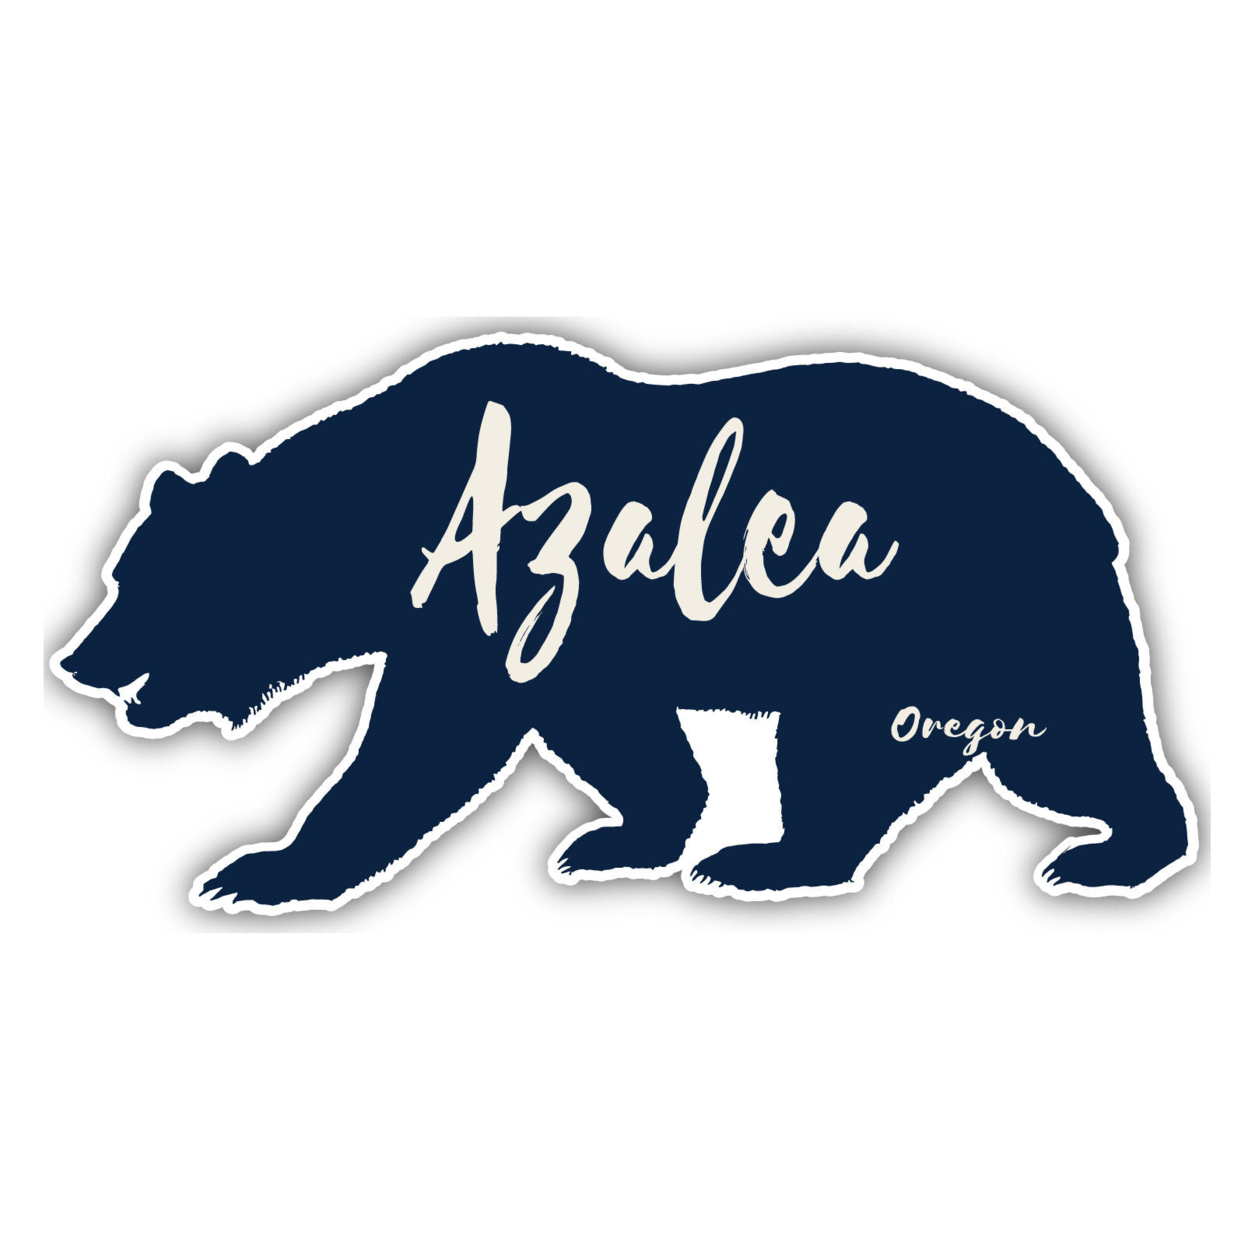 Azalea Oregon Souvenir Decorative Stickers (Choose Theme And Size) - Single Unit, 6-Inch, Bear